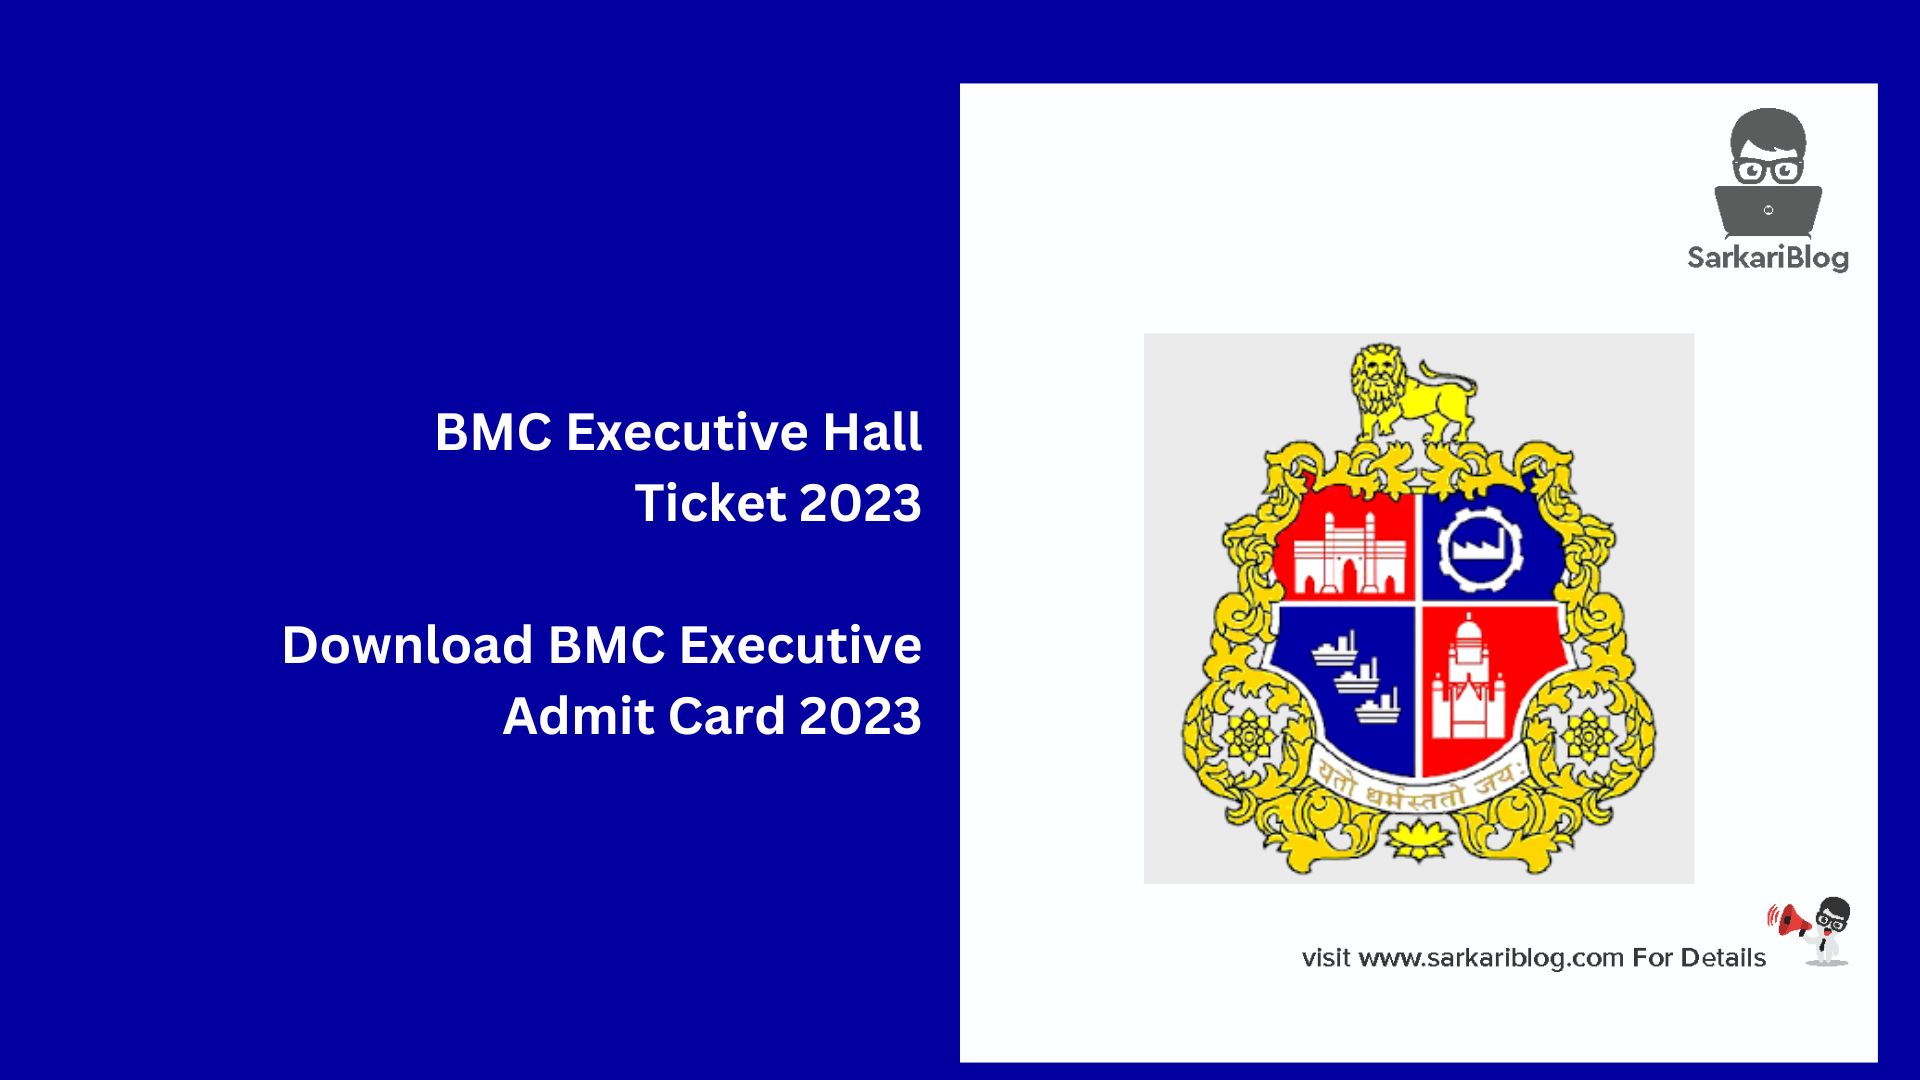 BMC Executive Hall Ticket 2023